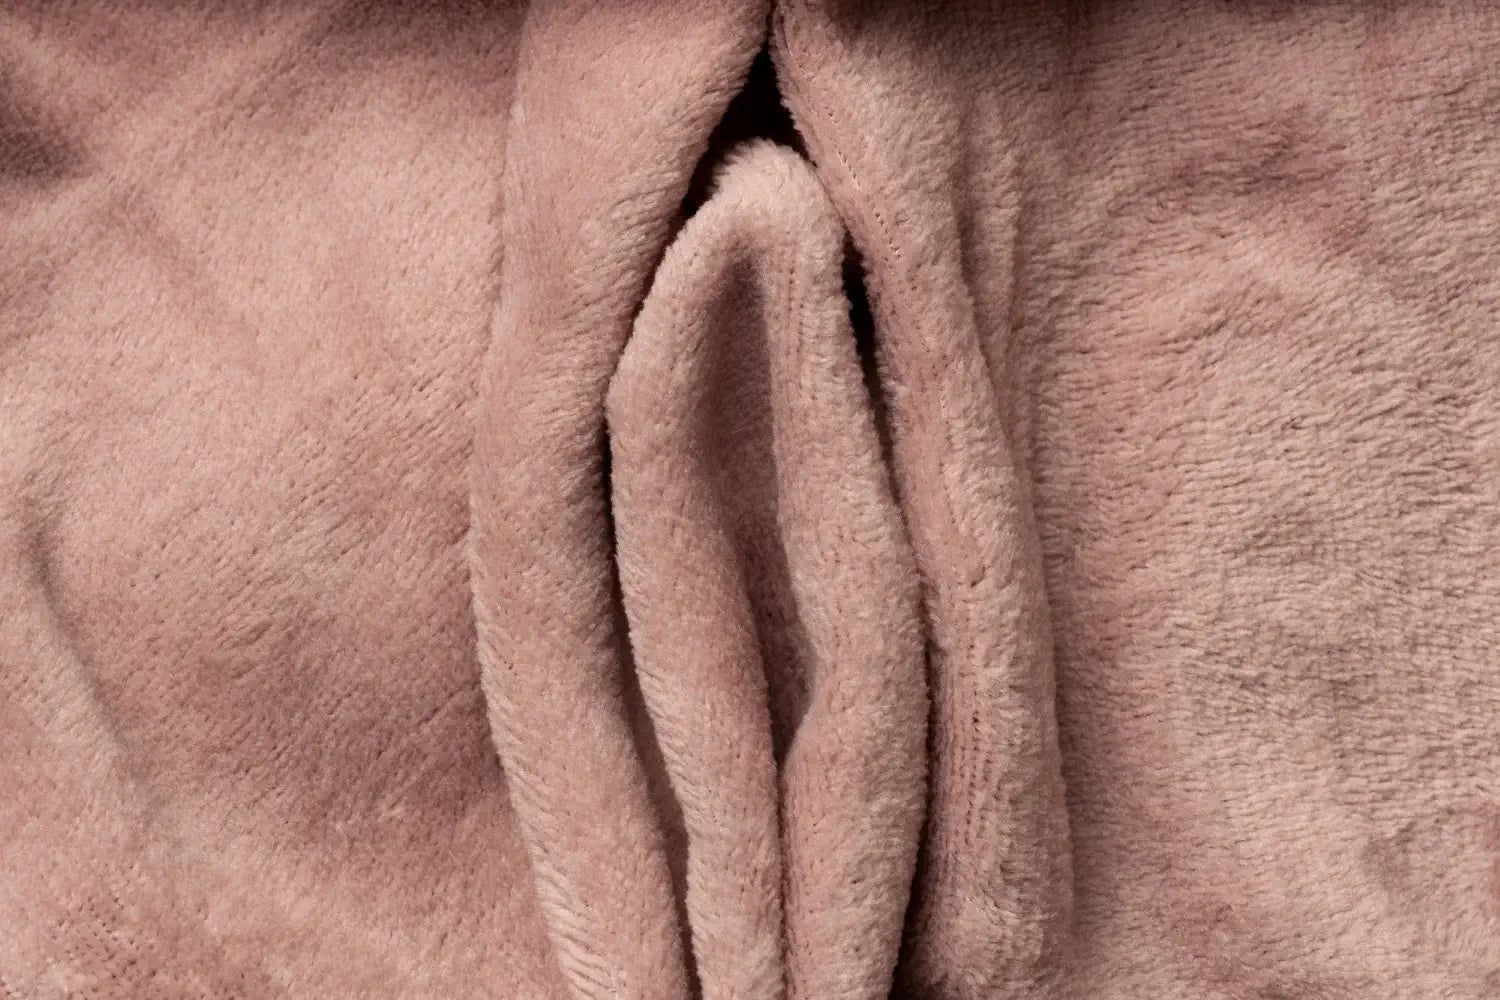 vaginal skin